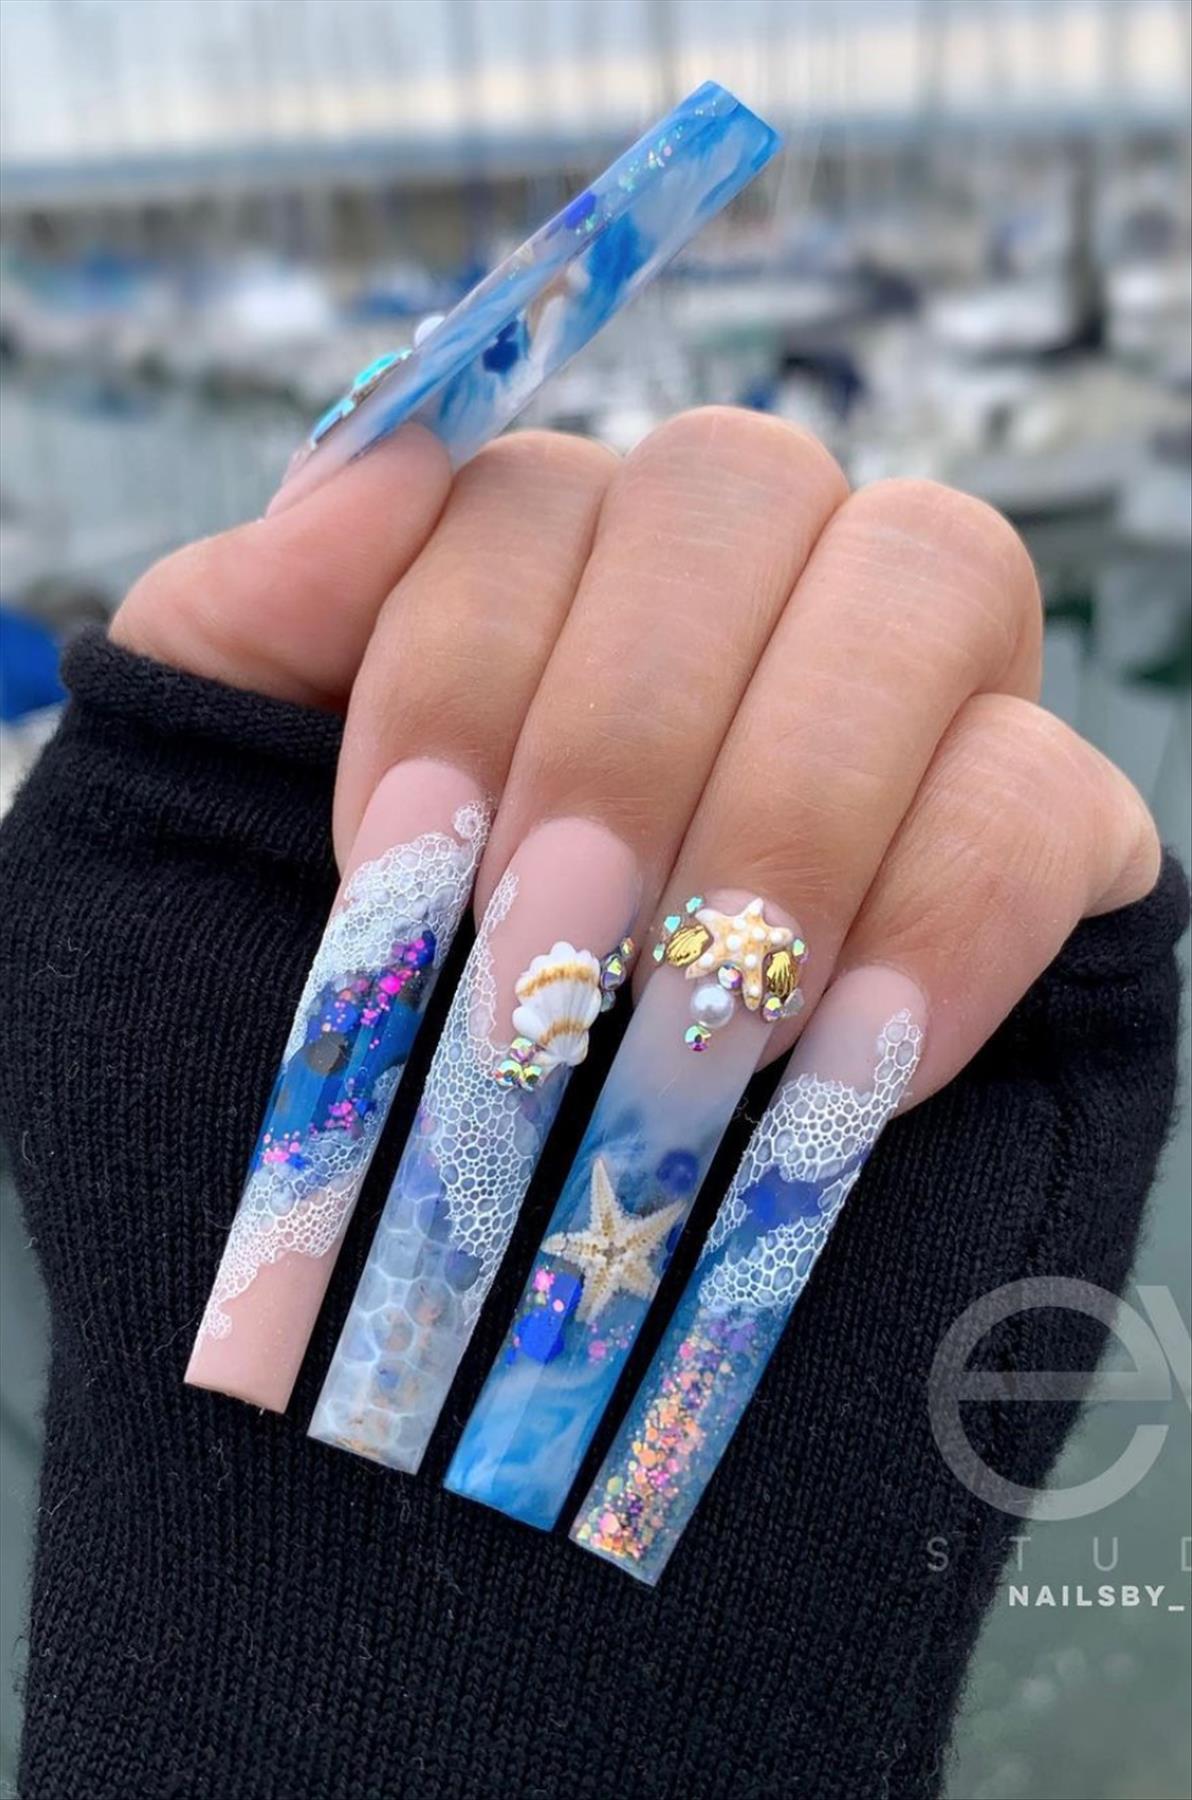 Beautiful acrylic coffin nails inspiration for any season